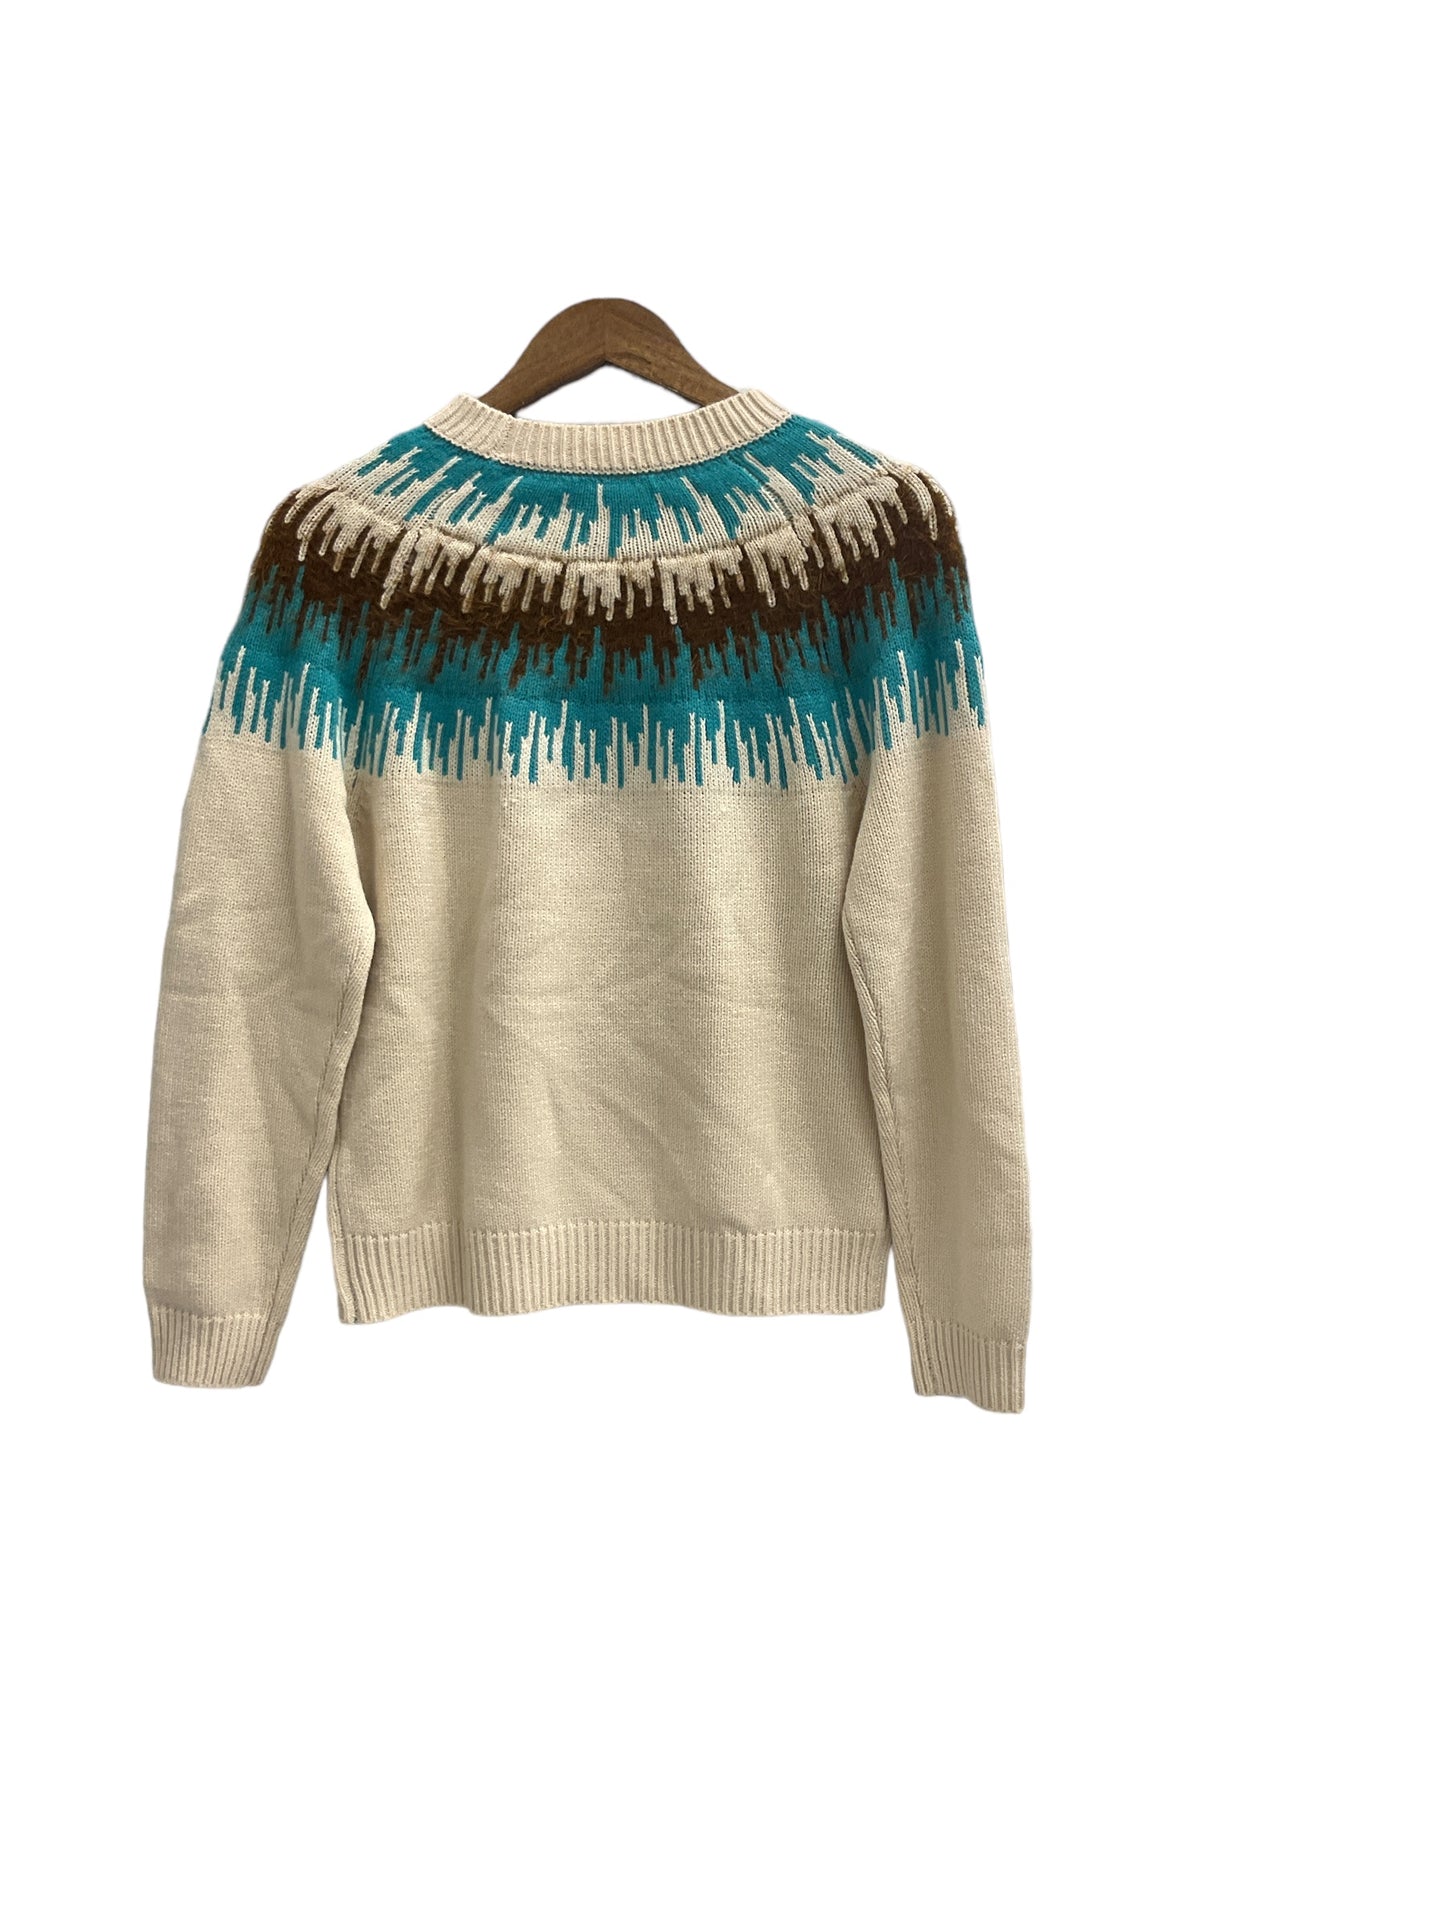 Sweater By Weatherproof  Size: M